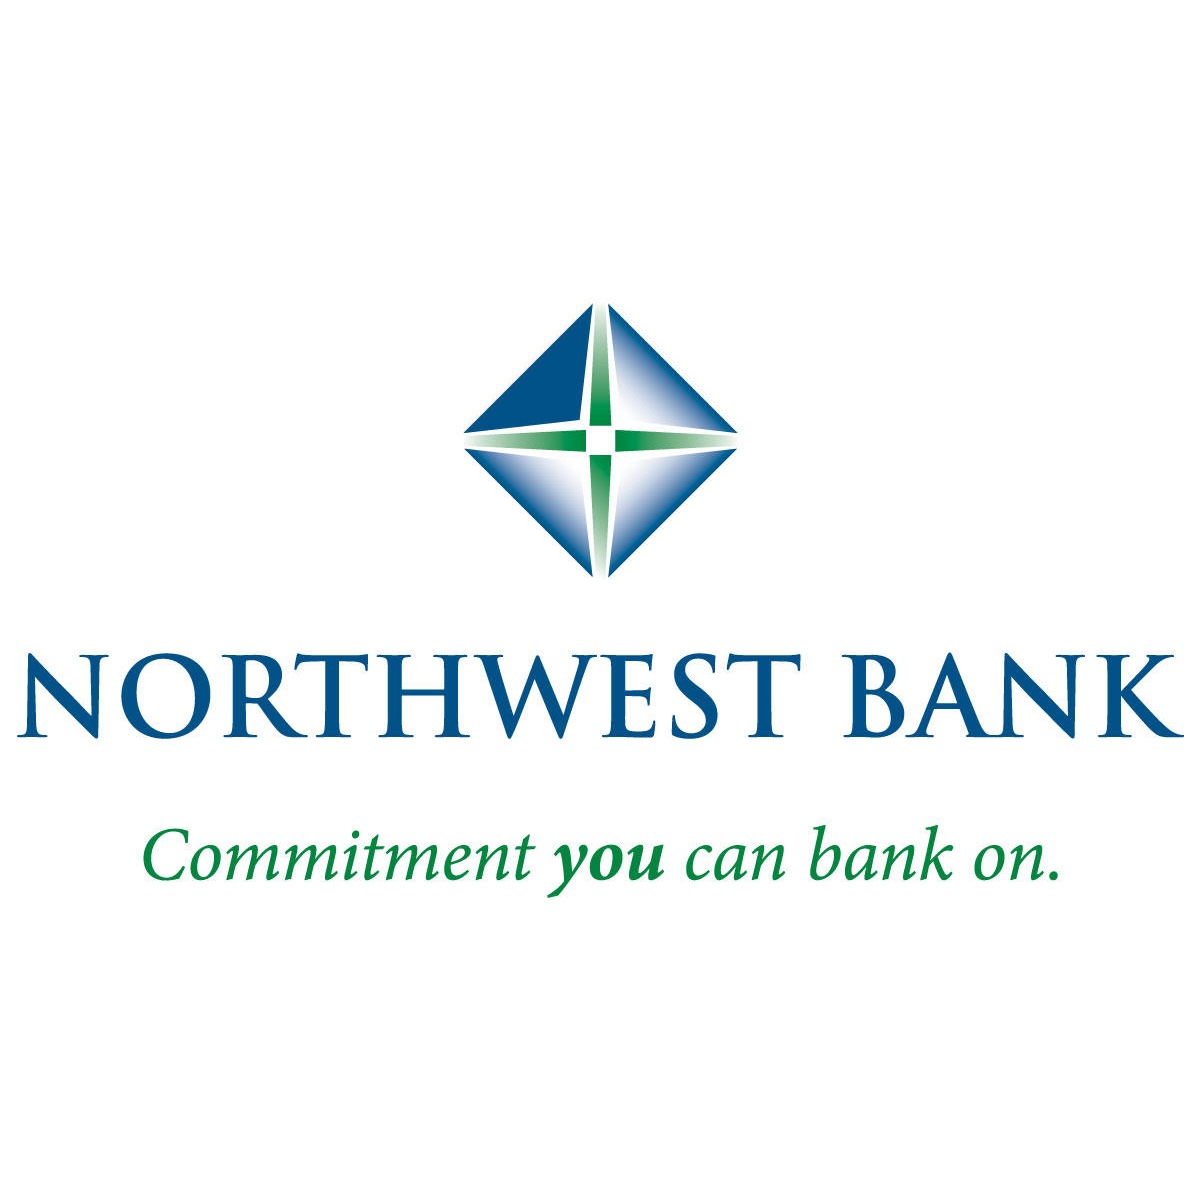 Northwest Bank - Live Banker at the ATM - Spencer, IA 51301 - (712)580-4100 | ShowMeLocal.com